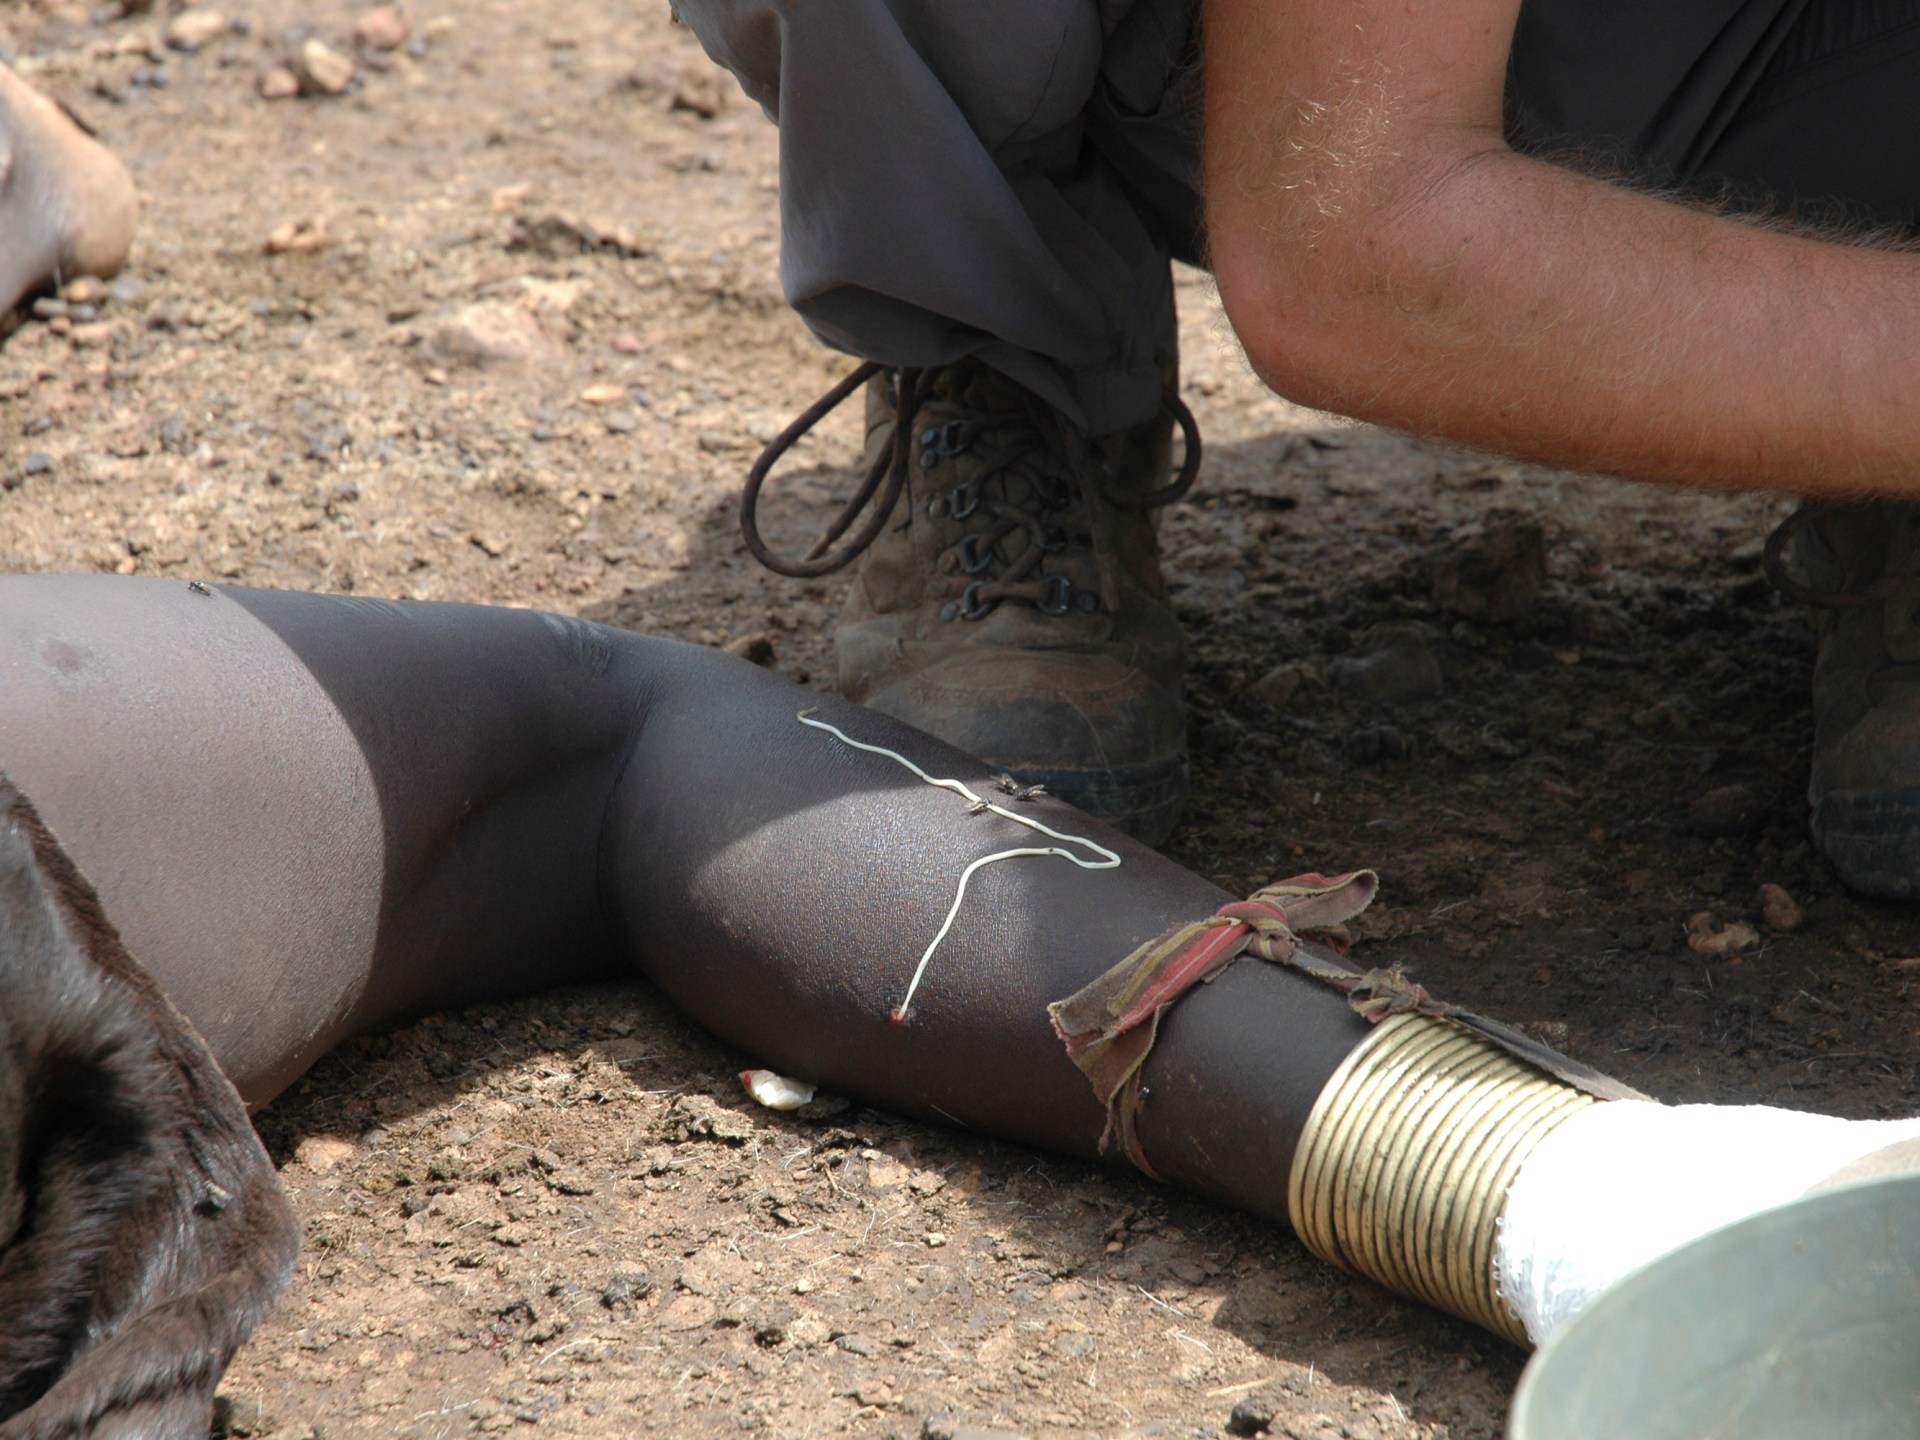 Effort to eradicate Guinea worm illness enters ‘final mile’